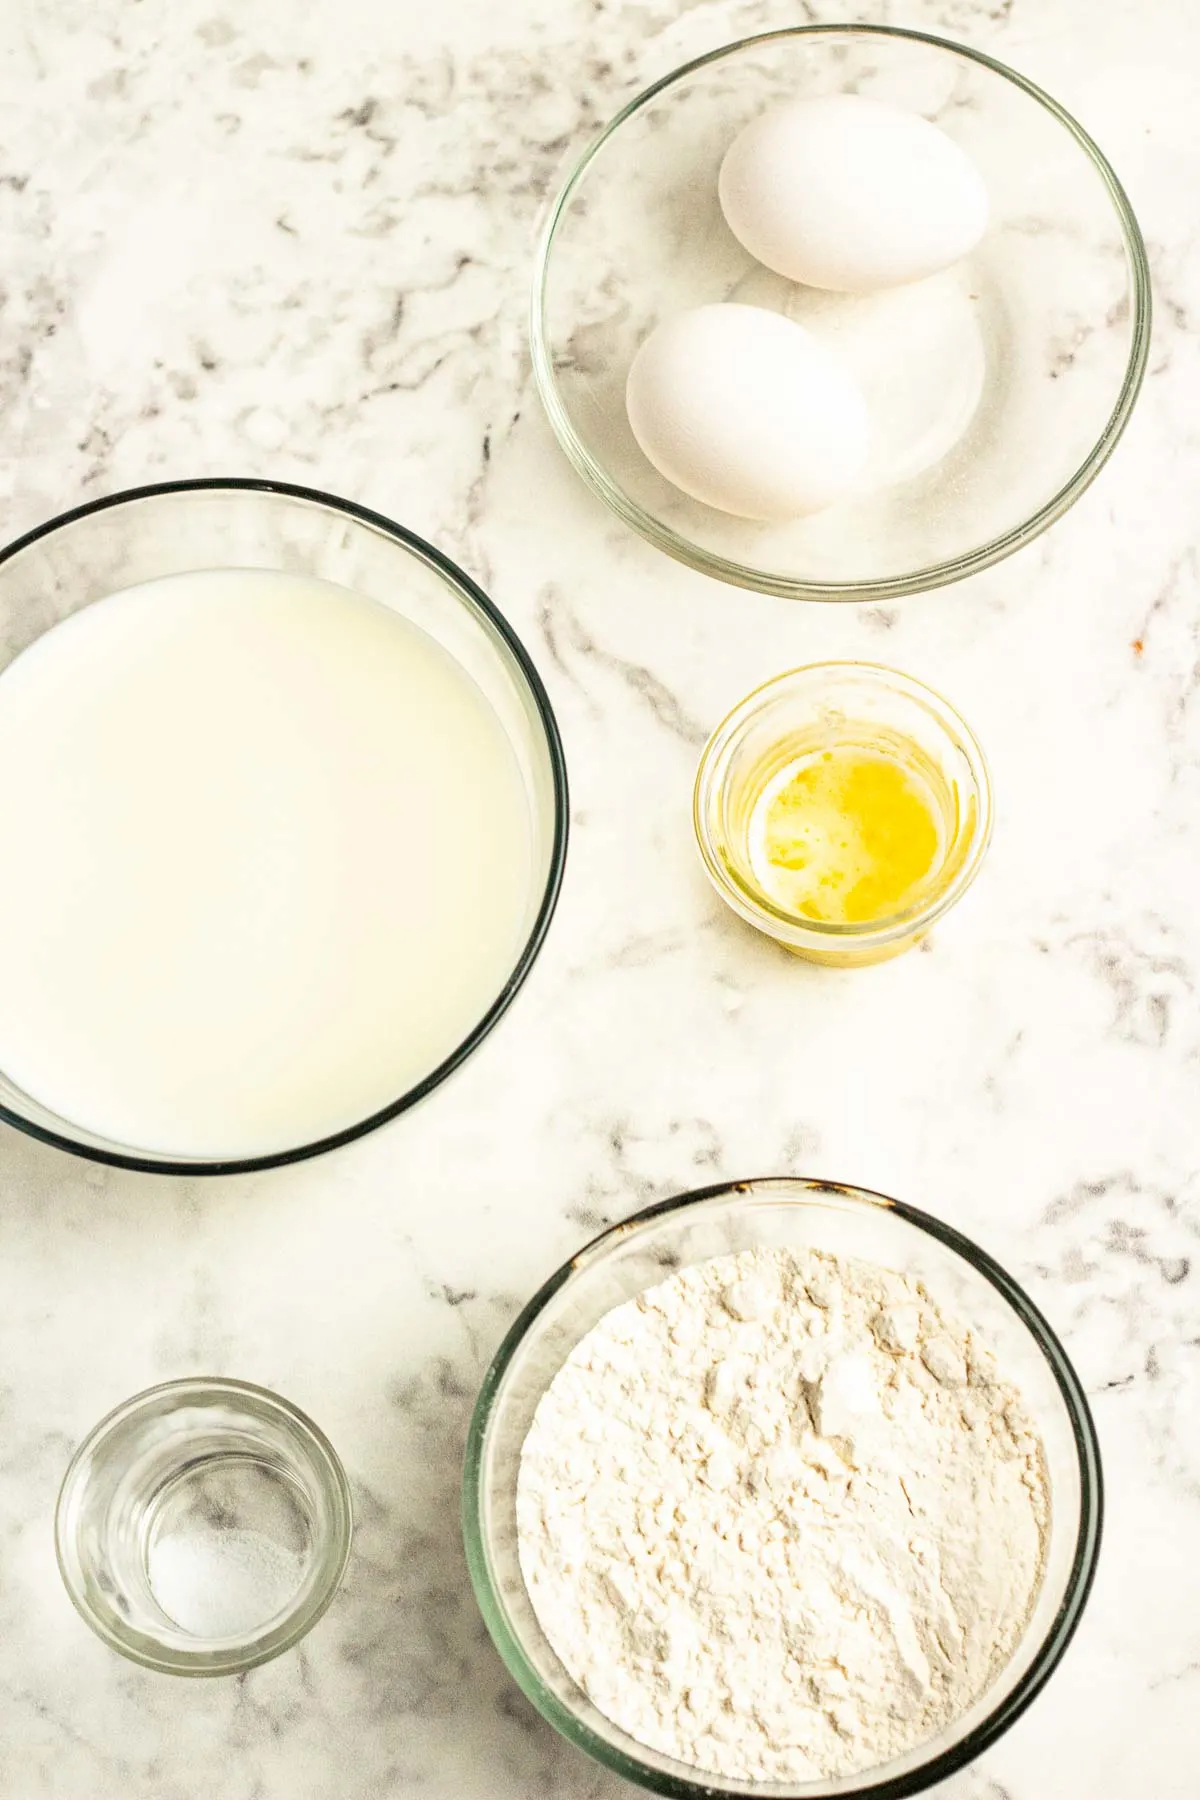 Ingredients for savory crepes: flour, milk, eggs, oil, salt.